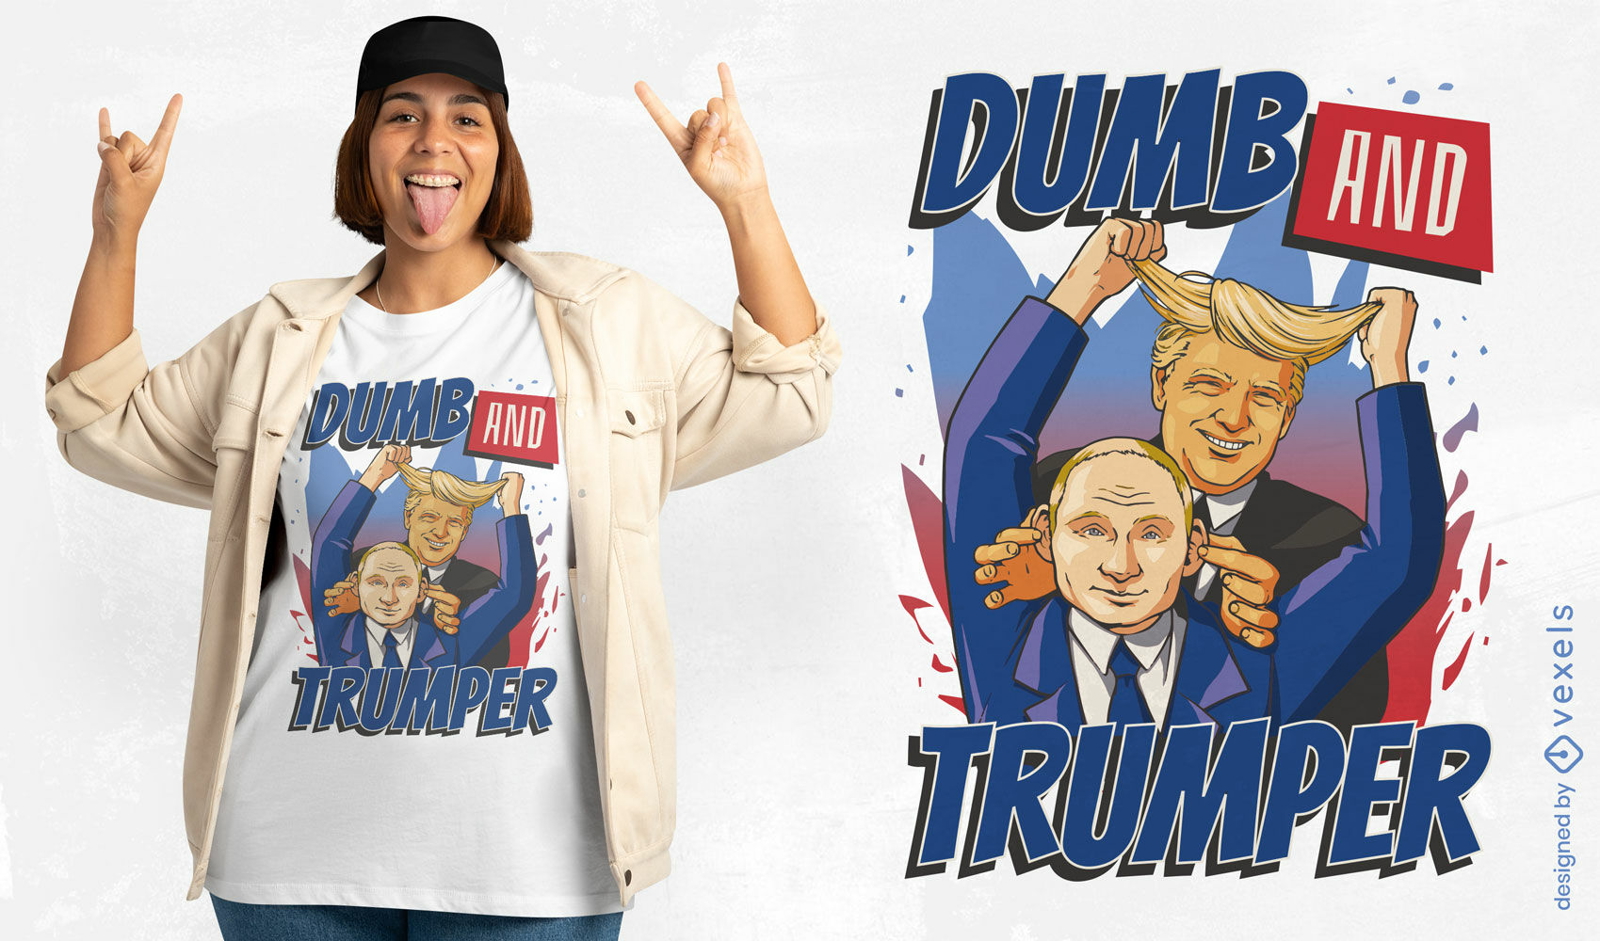 Trump and putin parody t-shirt design